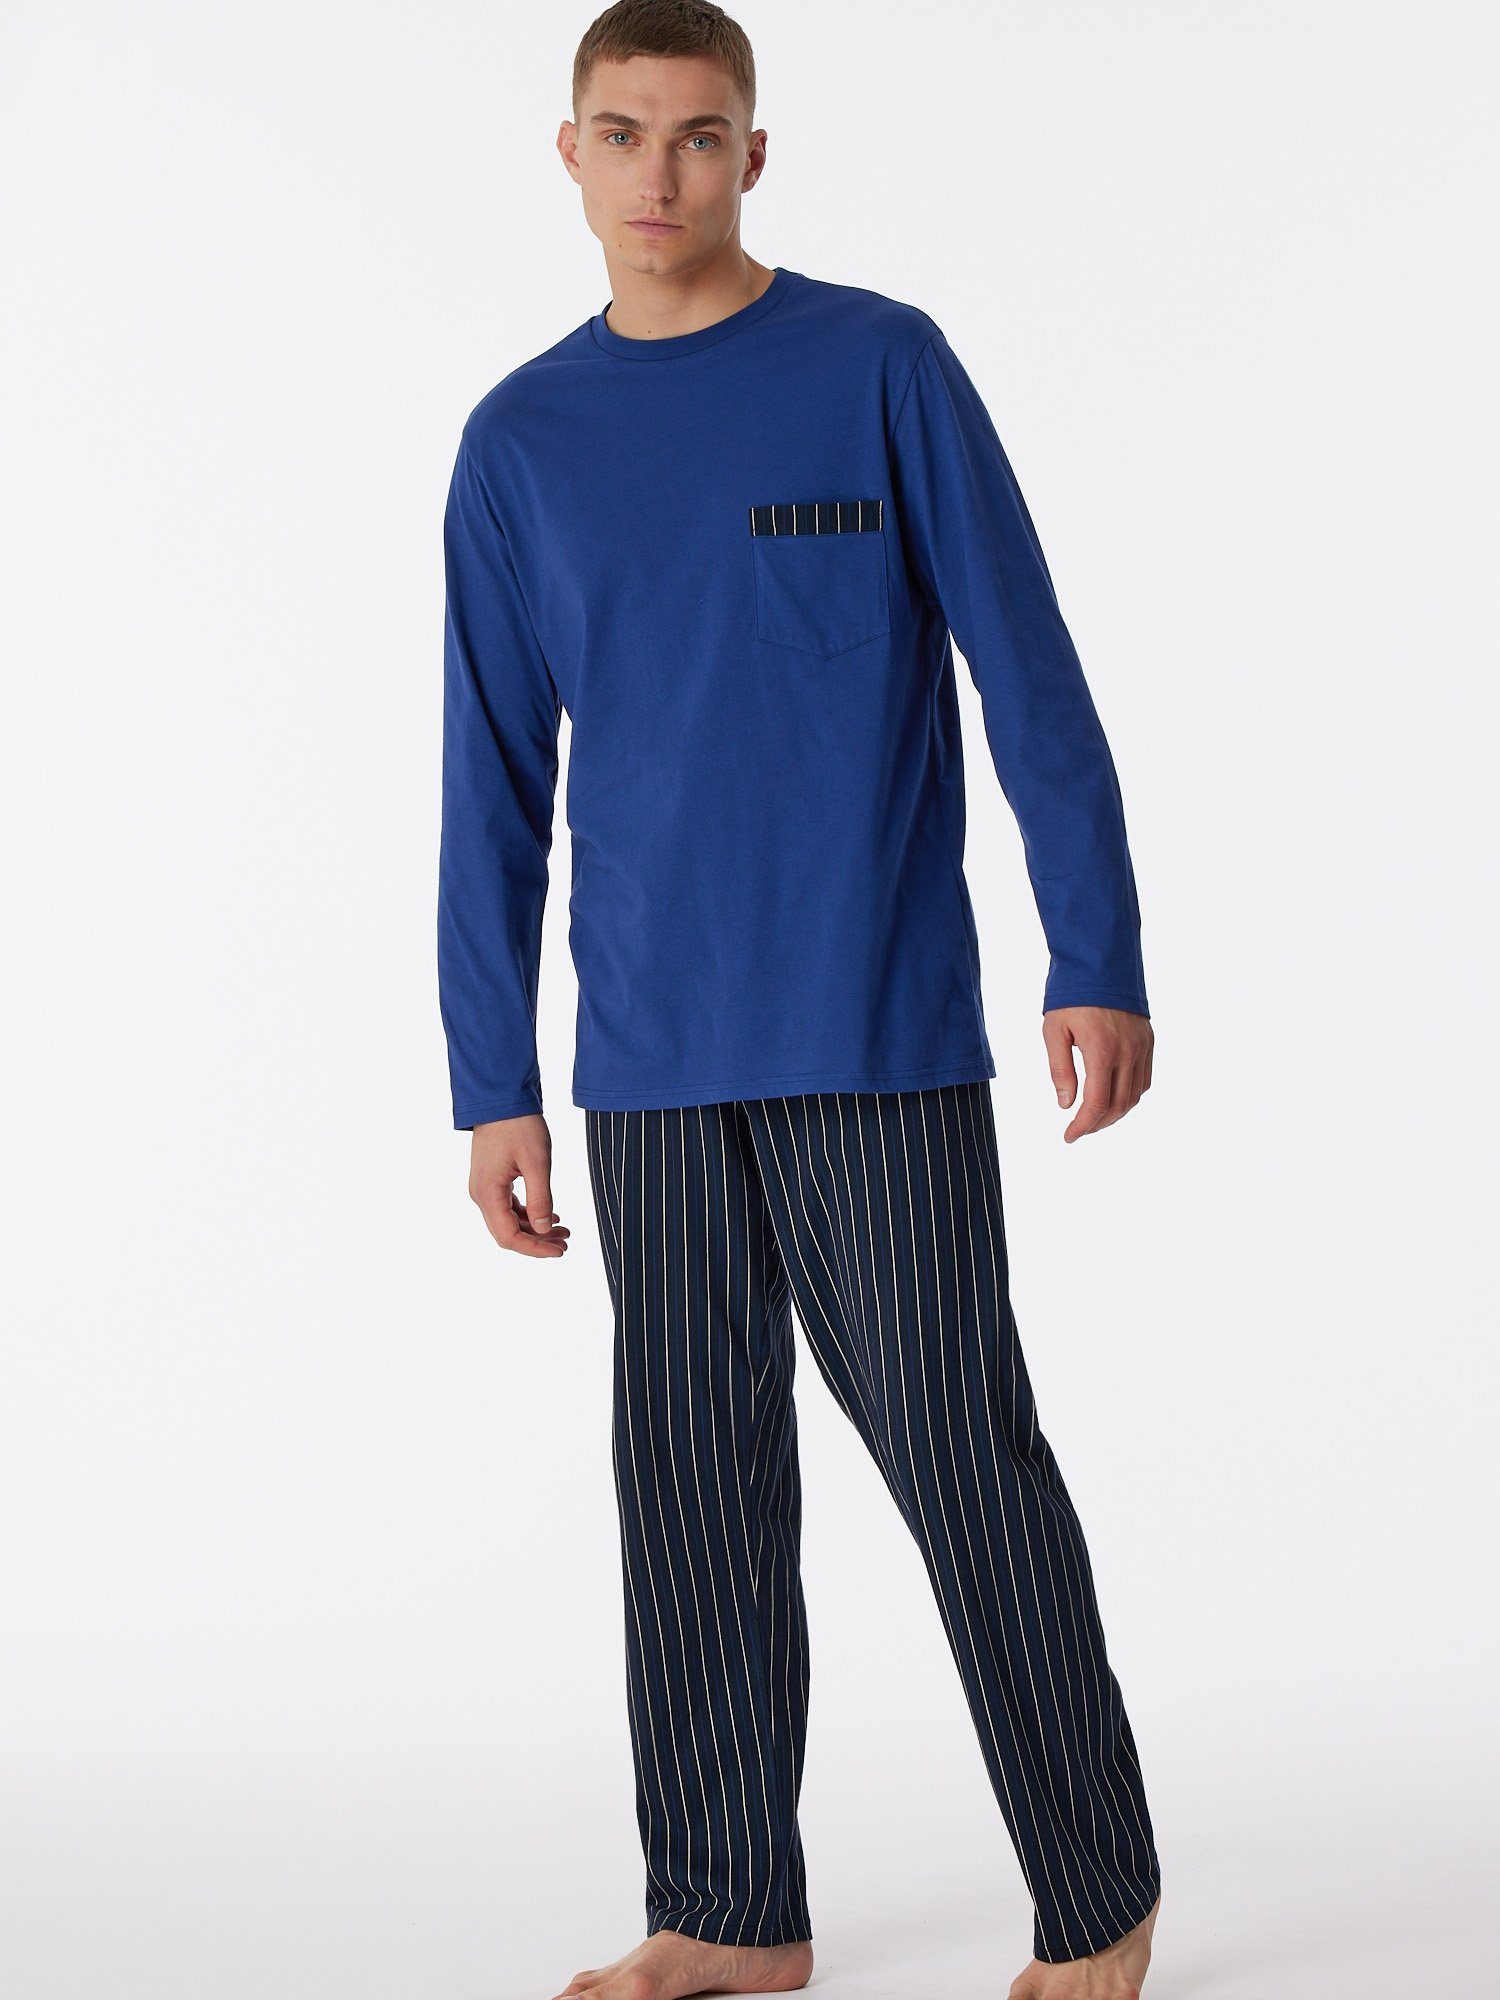 Schiesser Pyjama pyjama schlafmode Comfort Nightwear navy schlafanzug